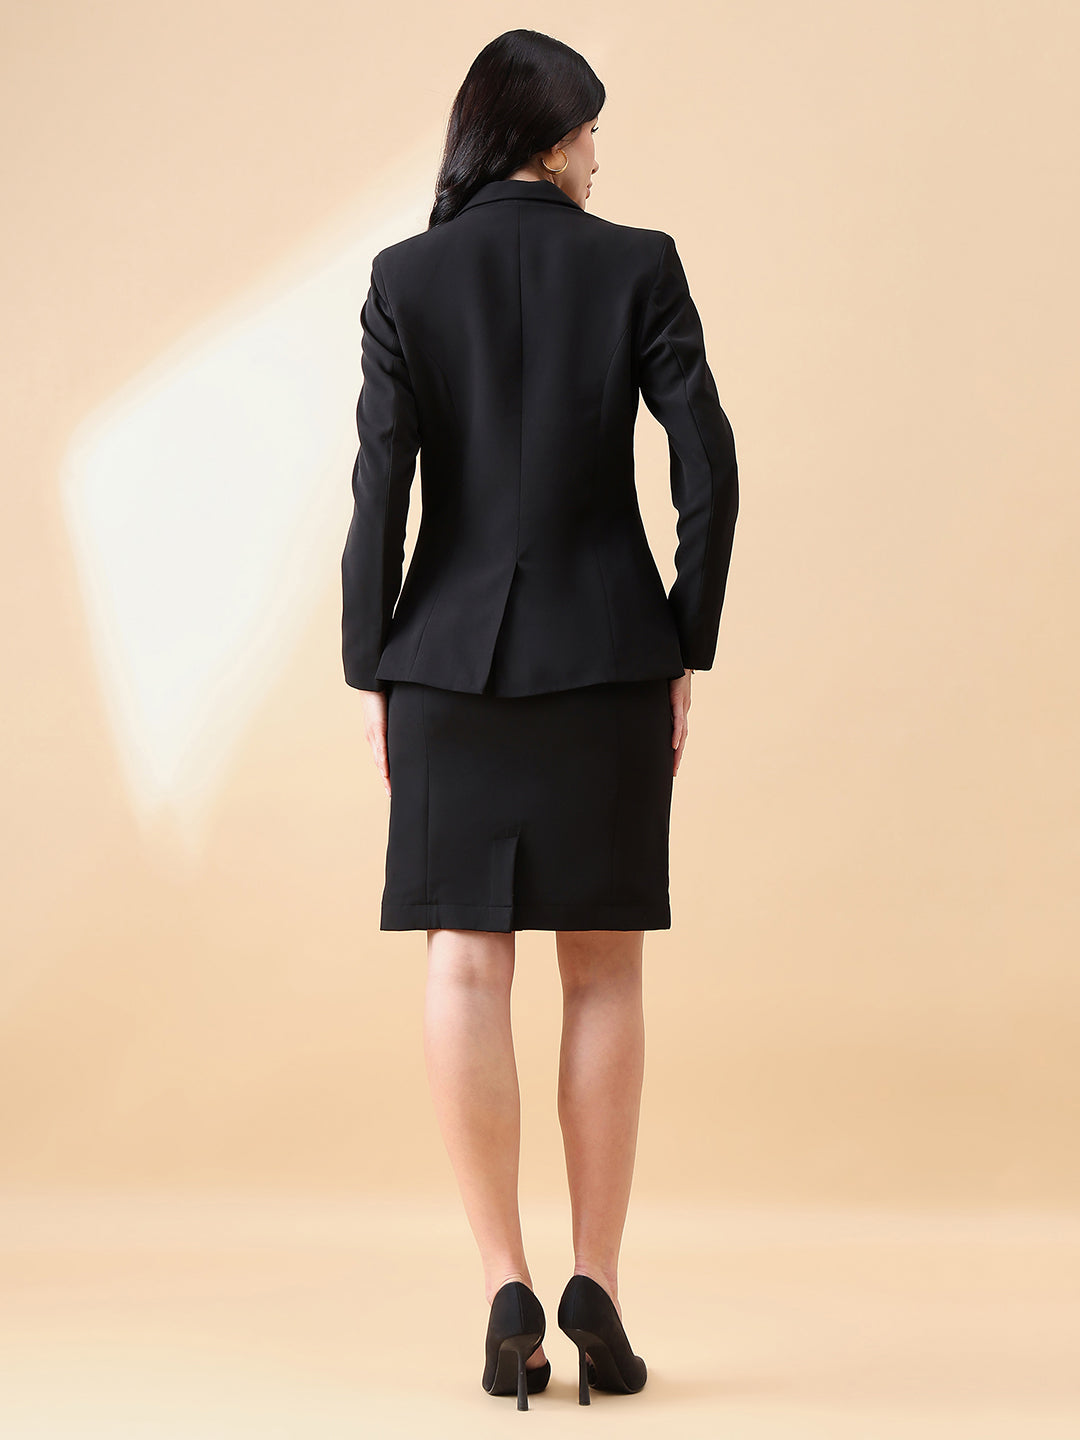 Black-Business-Formal-Stretch-Skirt-Suit